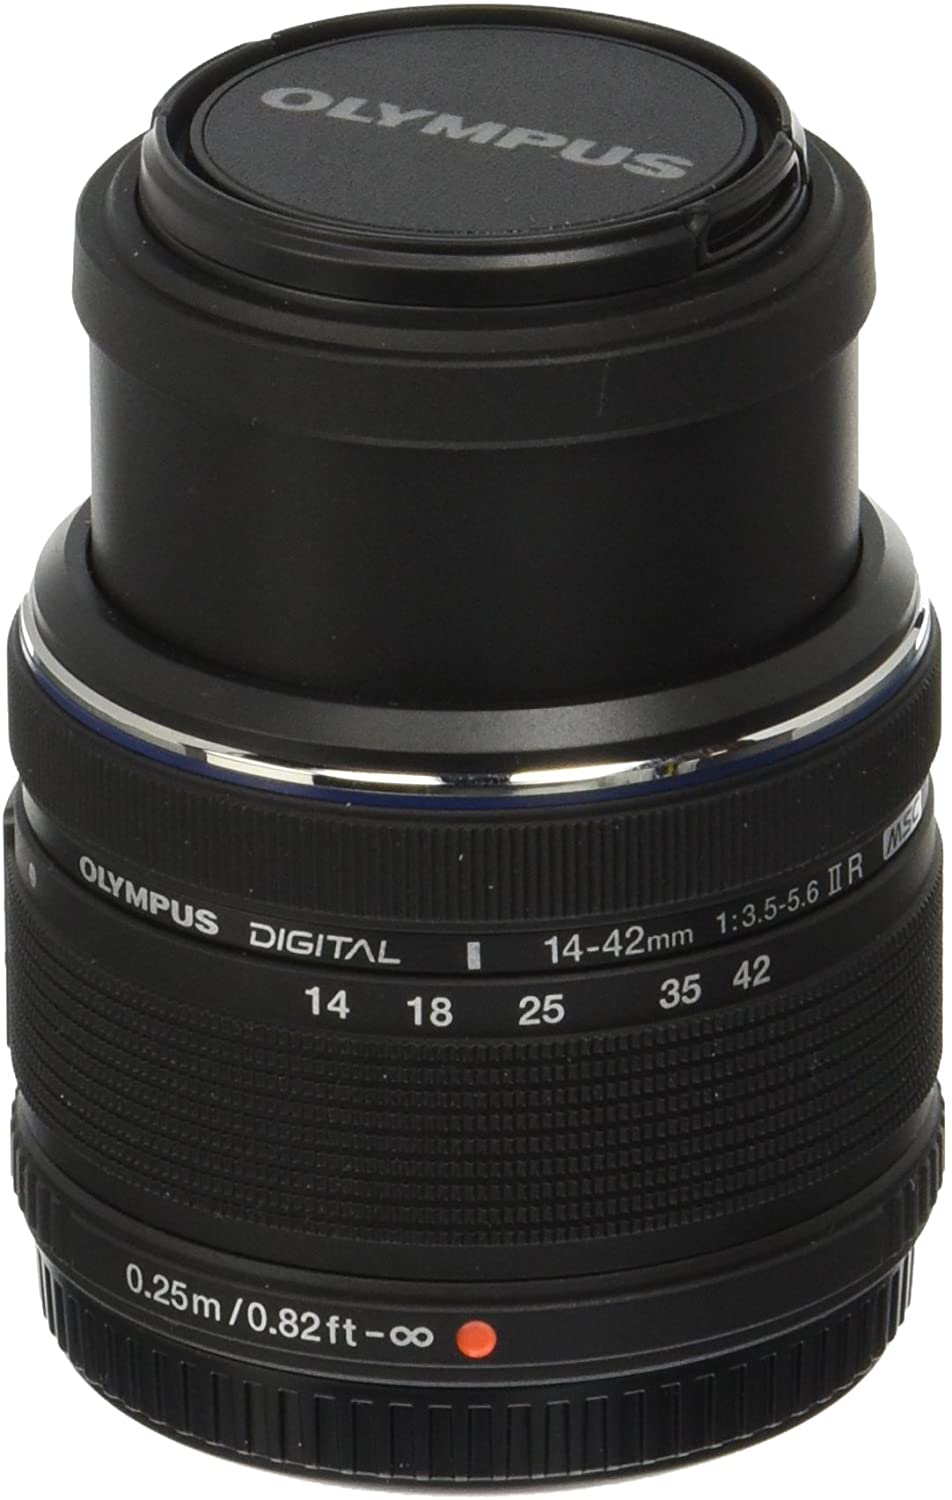 (Open Box) Olympus M.Zuiko Digital 14-42mm F3.5-5.6 II R Lens, for Micro Four Thirds Cameras (Black)